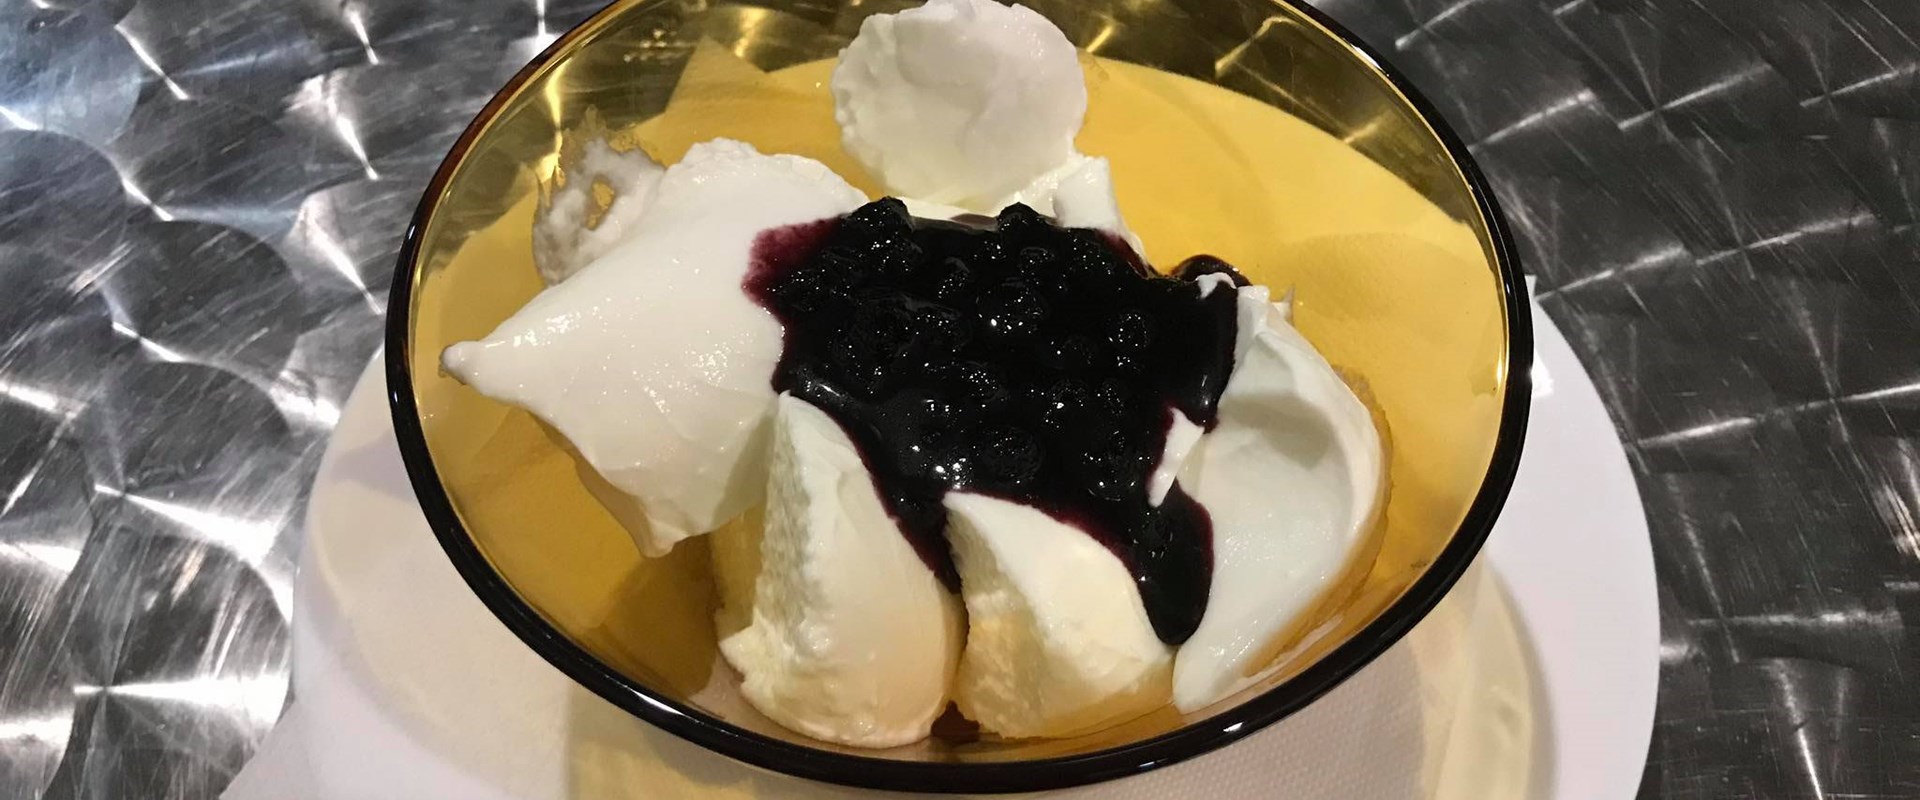 Homemade yoghurt with jam - 